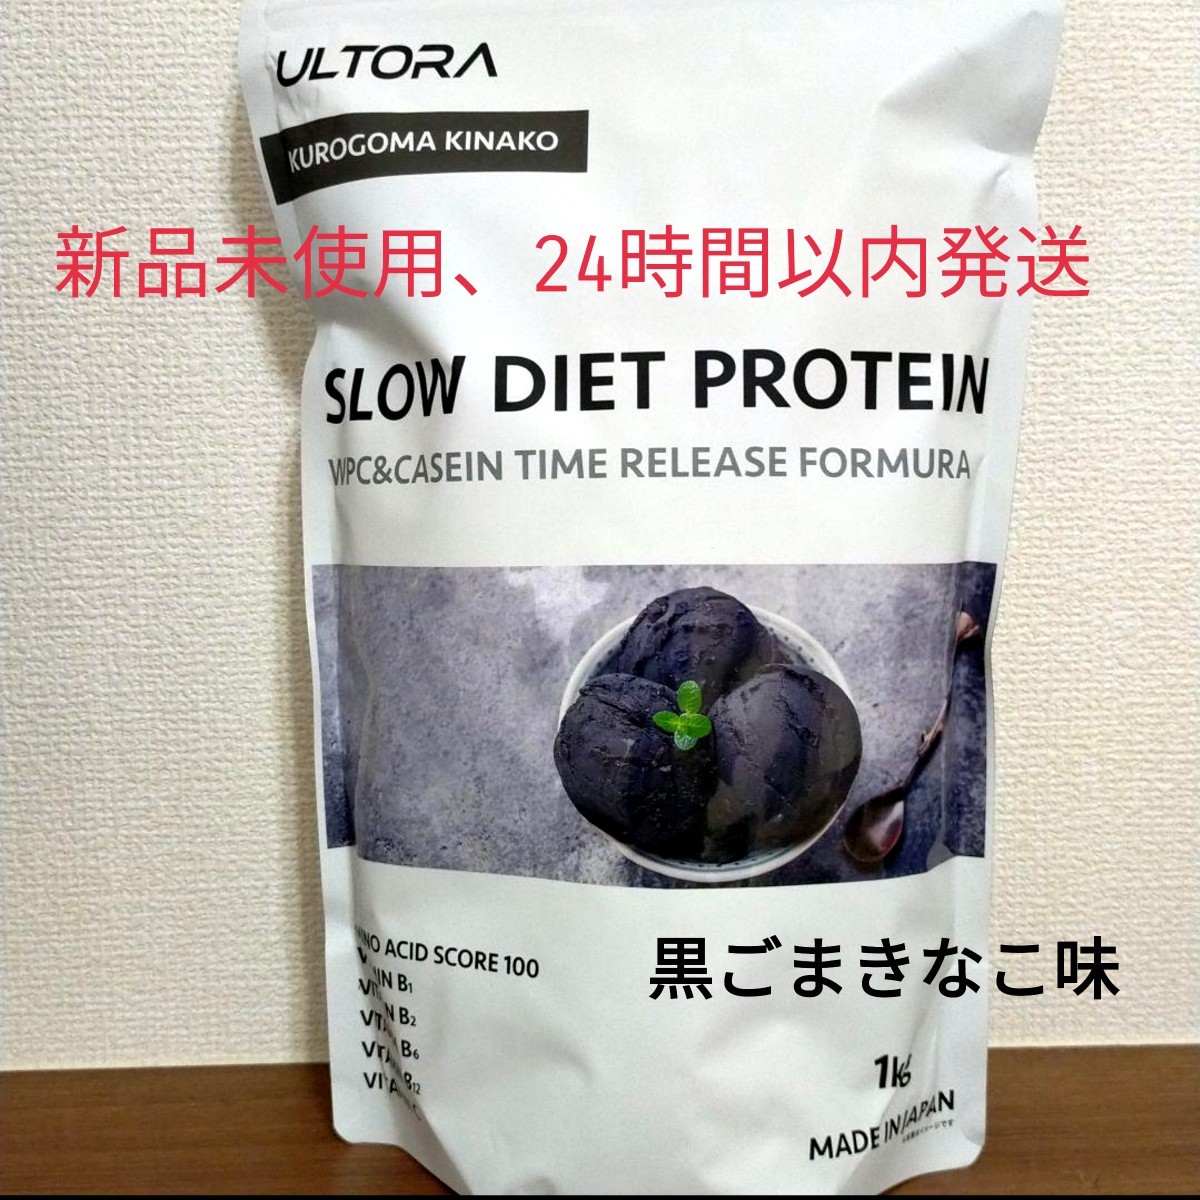 ULTORA SLOW DIET PROTEIN 黒ゴマきなこ風味 1kg - 健康用品